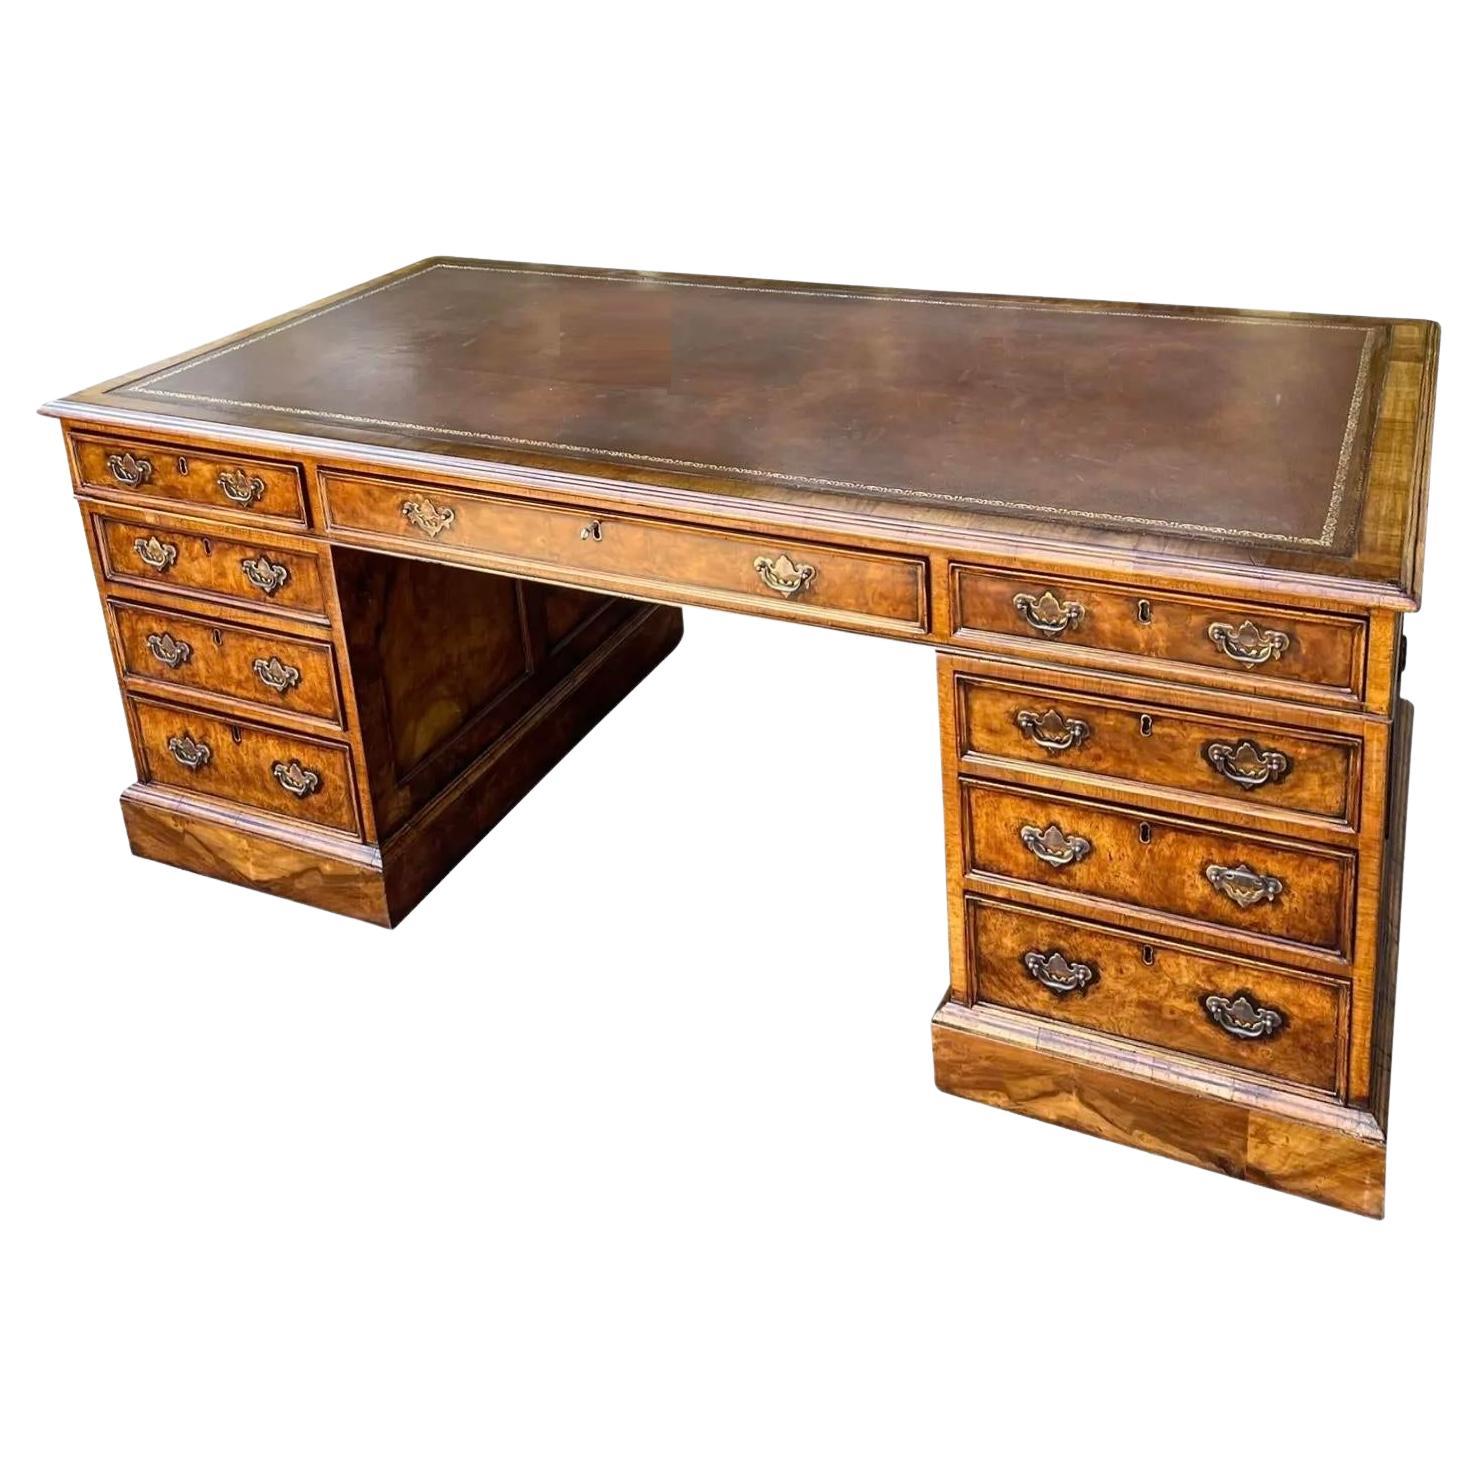 Georgian Desks and Writing Tables